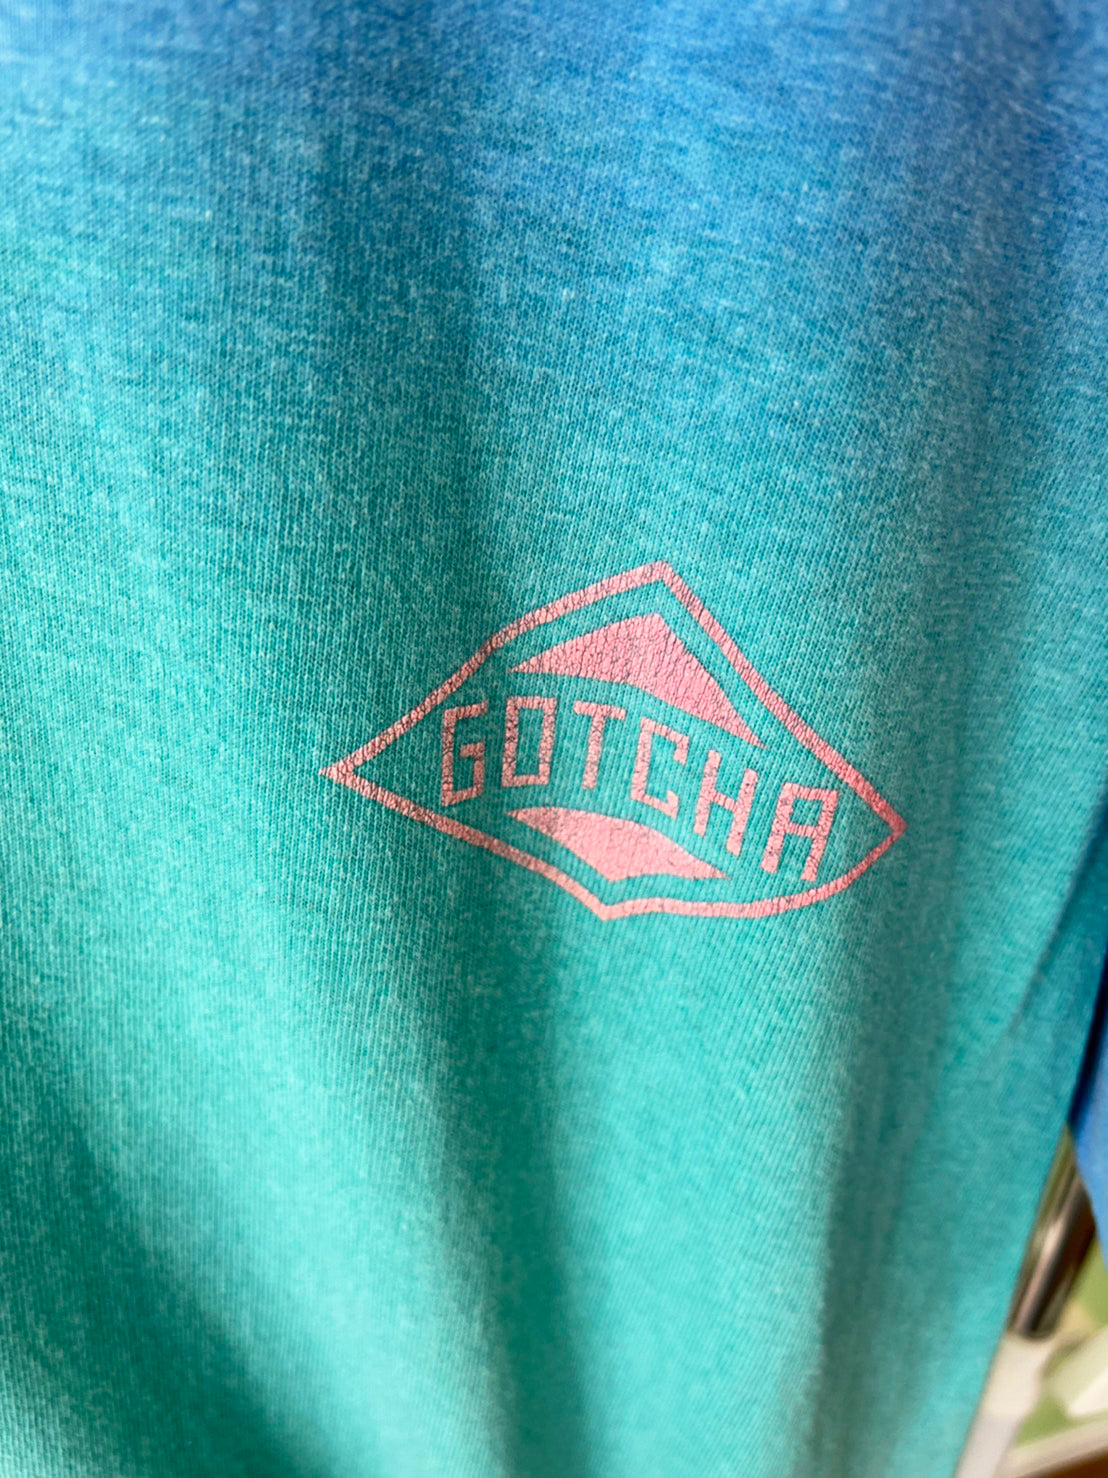 【GOTCHA】90's vintage surf  gotcha rare tie dye t-shirt made in USA (men's M)